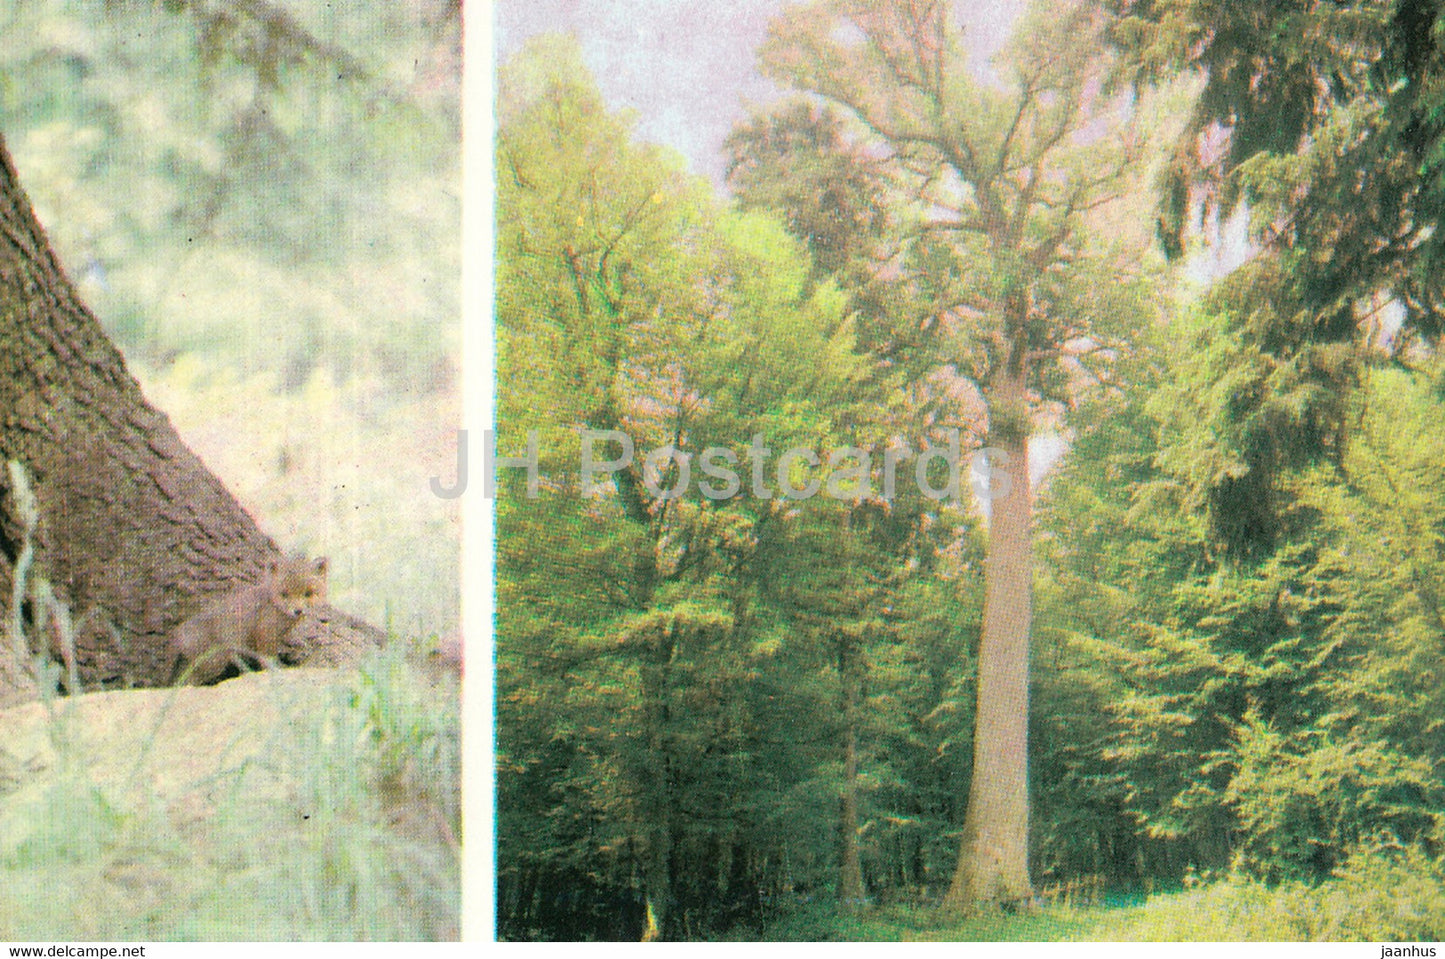 Belovezhskaya Pushcha National Park - A Young Fox near its burrow - The King Oak - 1981 - Berarus USSR - unused - JH Postcards